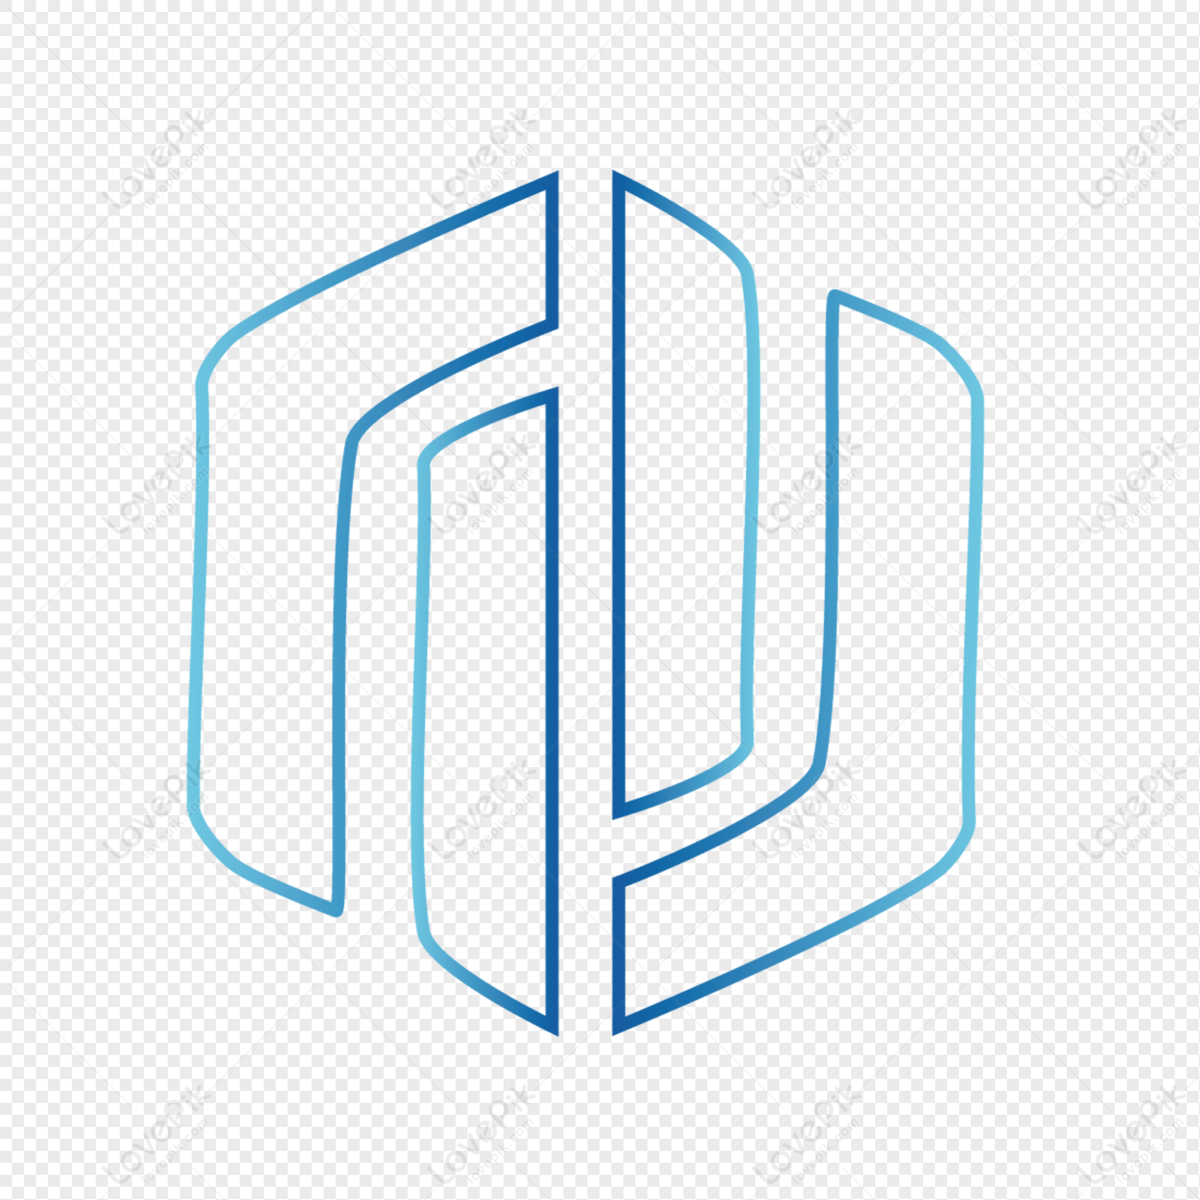 Png Logo png download - 1200*1200 - Free Transparent Logo png